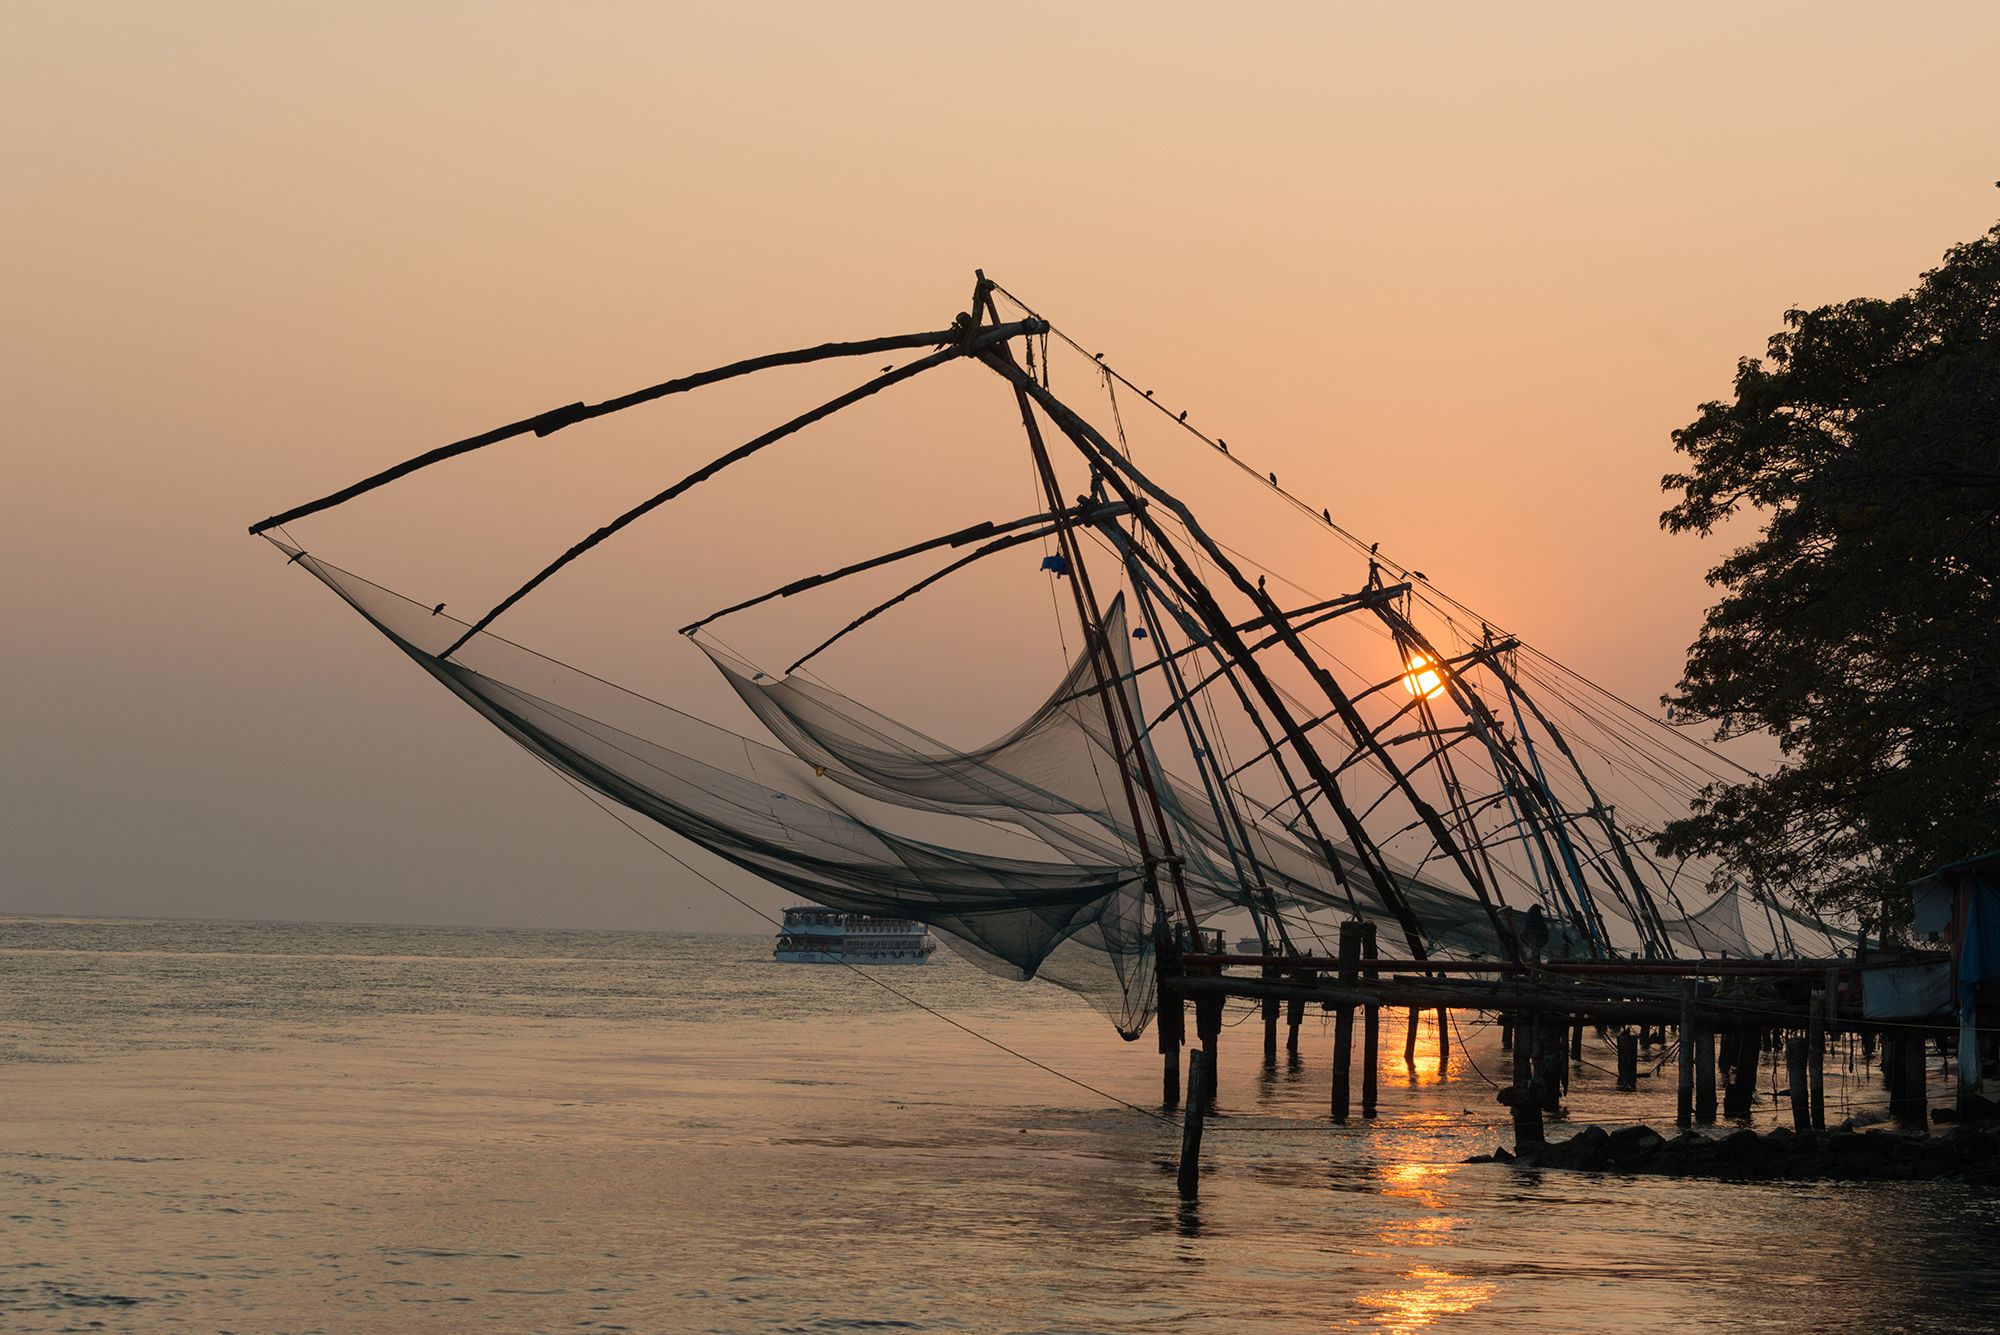 Chinese fishing nets in Fort Cochin, Kochi, Kerala